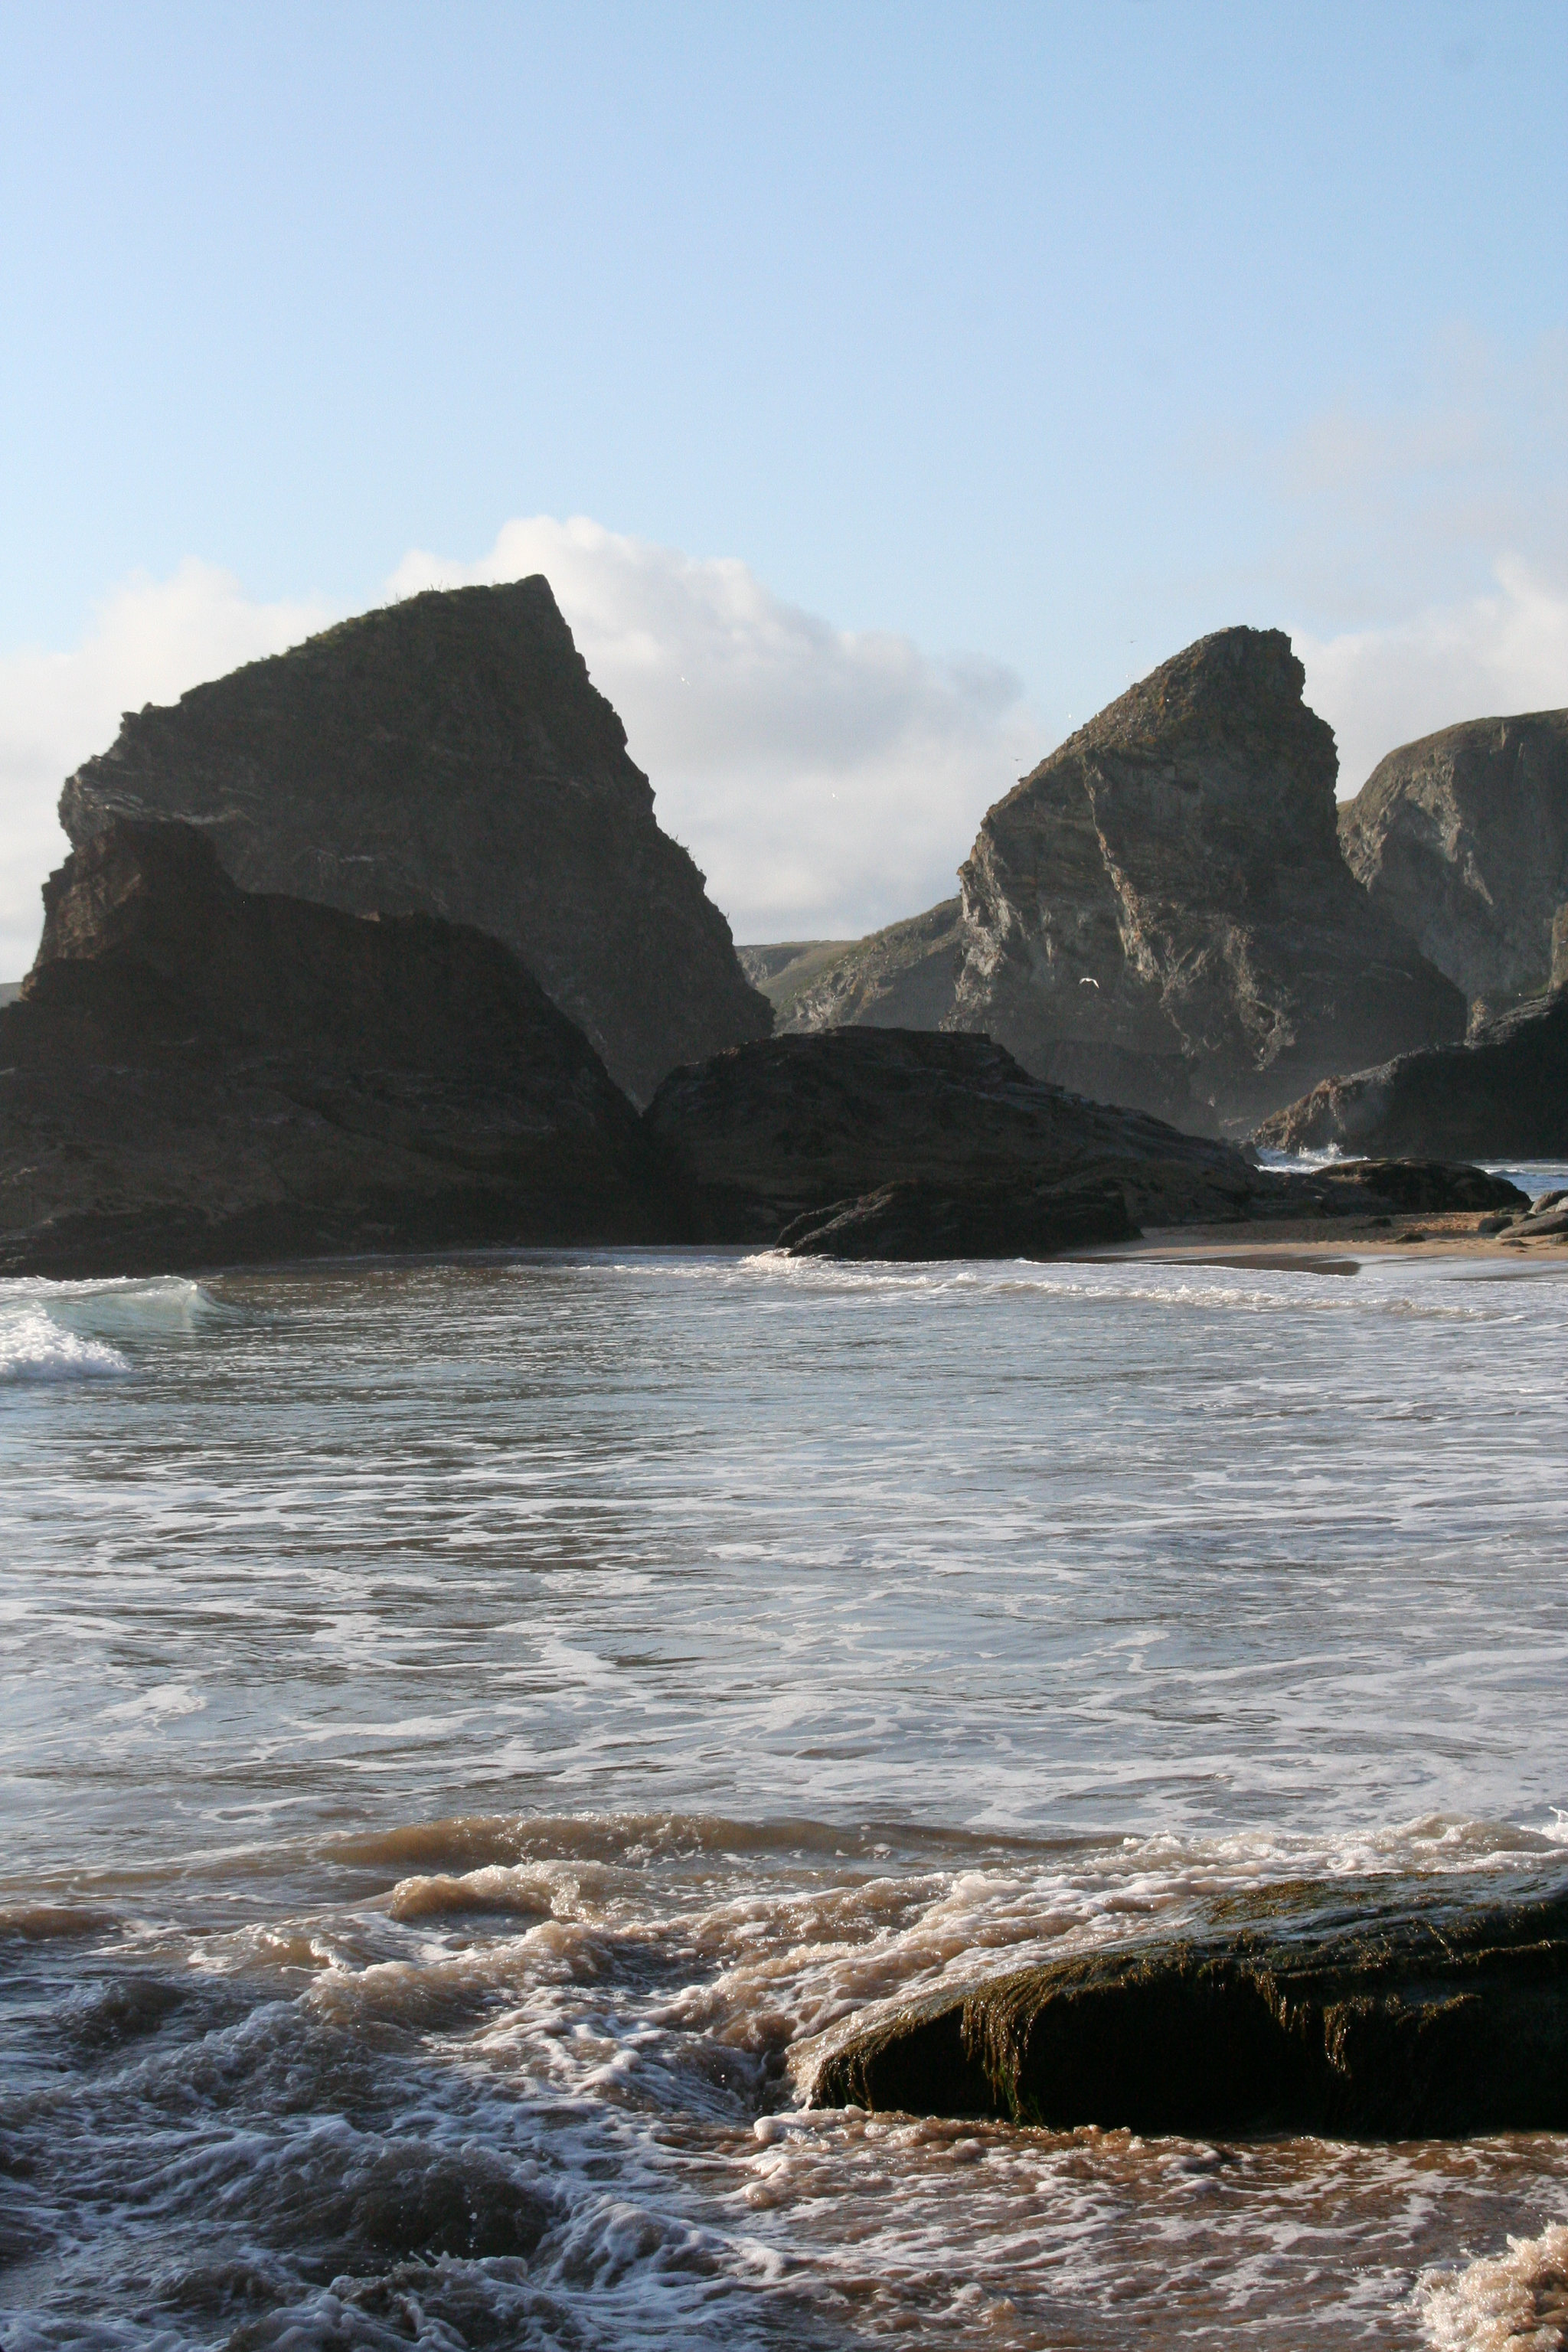 Located on the coast of the. Камни скалы вода. Море волны скалы камни. Скалы в воде. Вертикальные камни скалы.